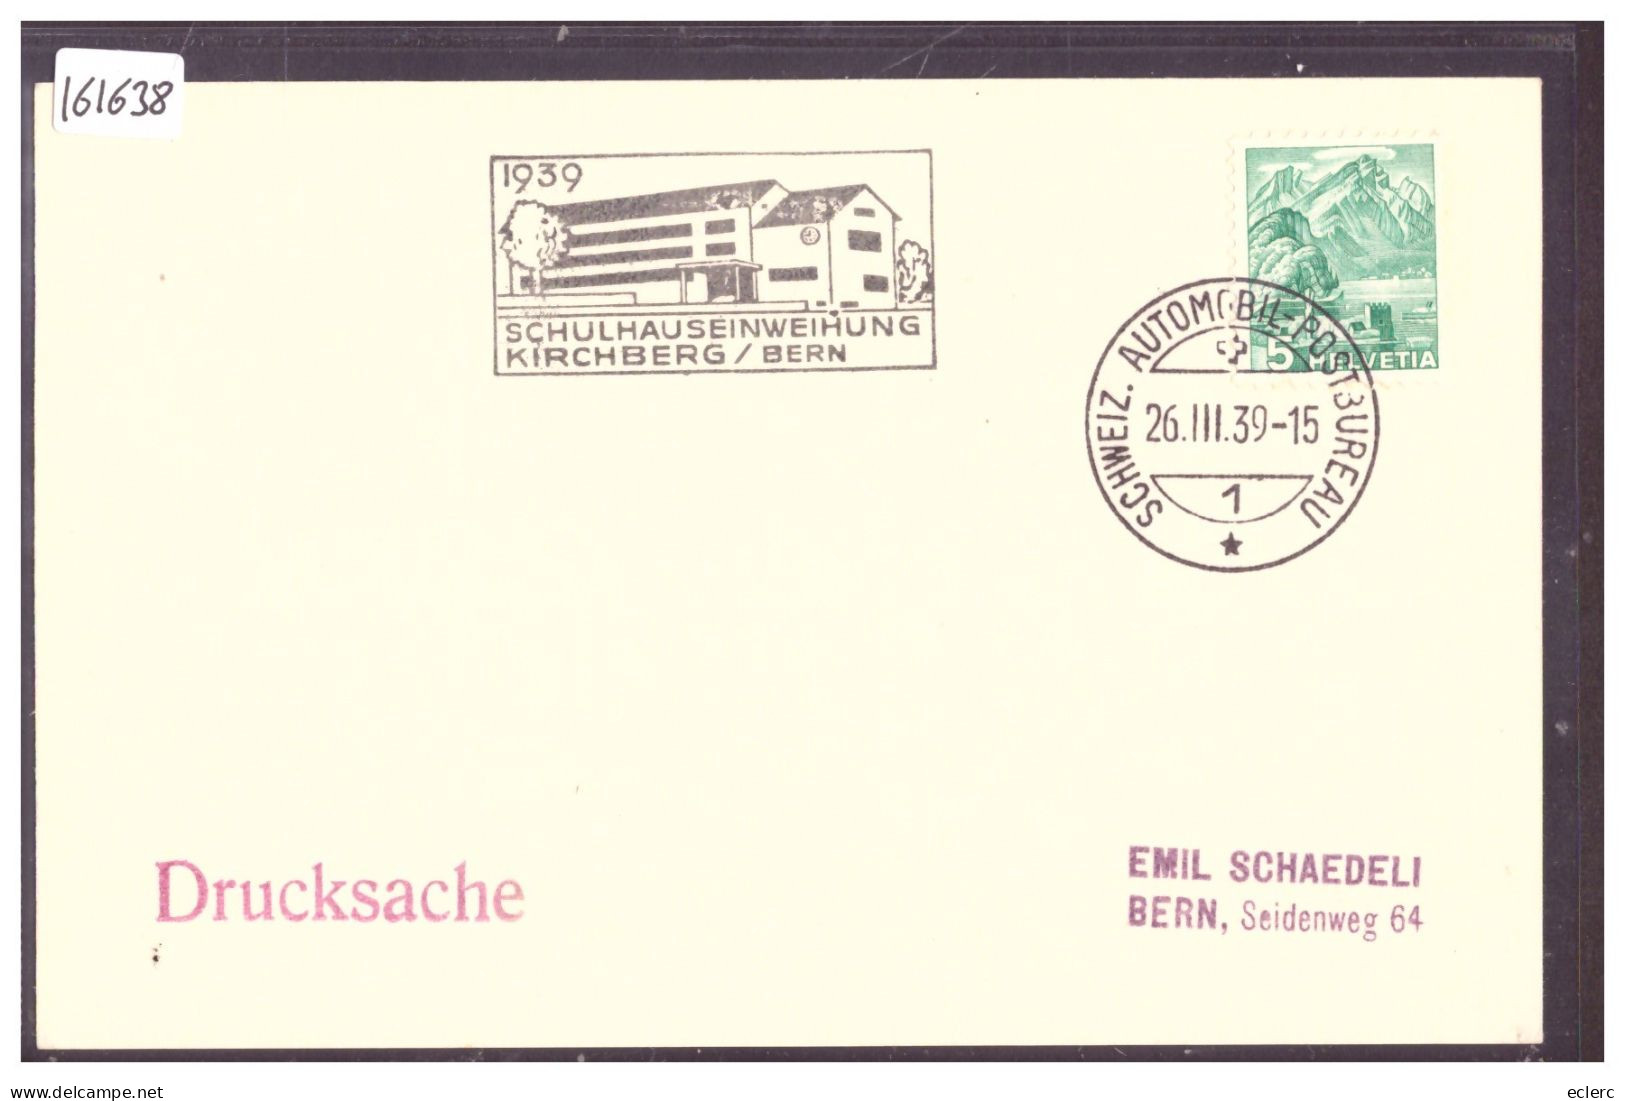 KIRCHBERG - SCHULHAUSEINWEIHUNG 1939 - AUTOMOBIL POSTBUREAU - BUREAU DE POSTE AUTOMOBILE - TB - Kirchberg